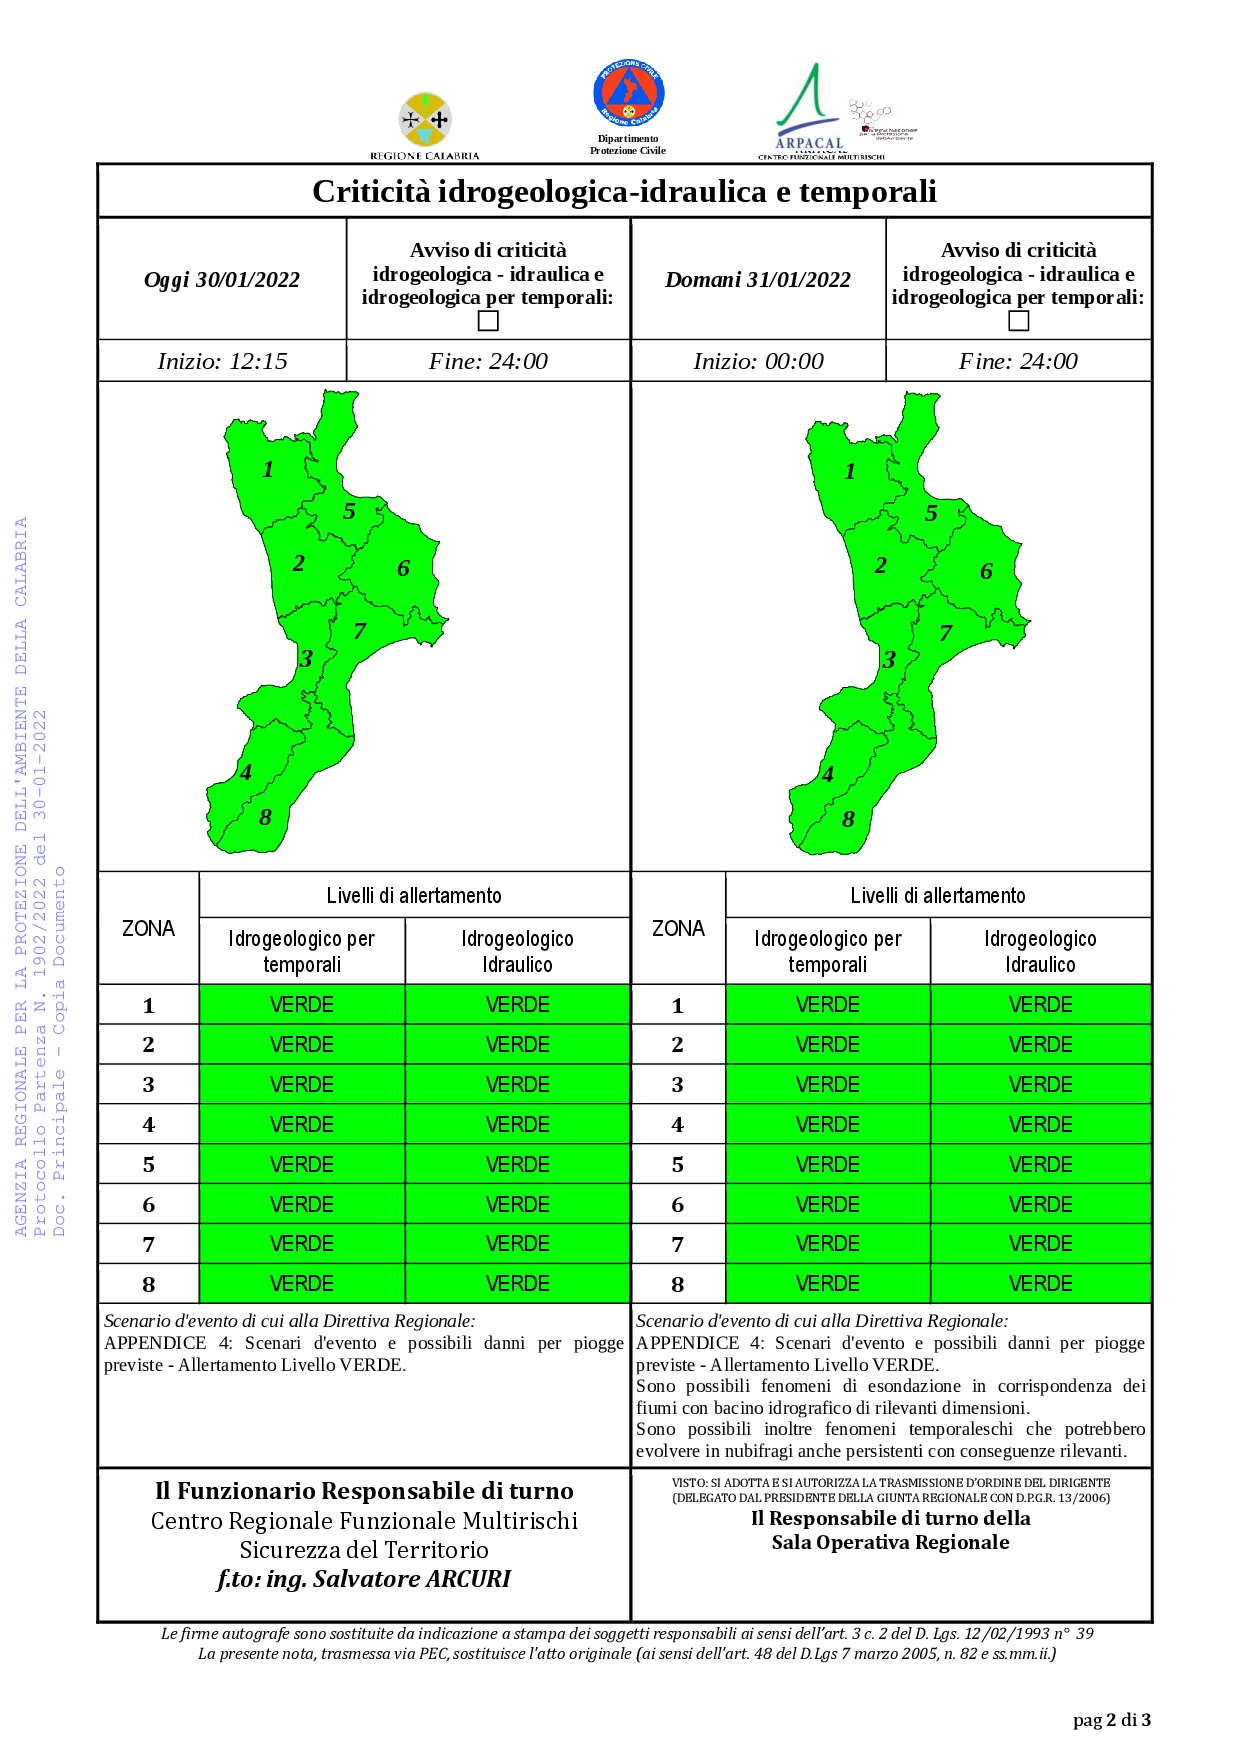 Criticità idrogeologica-idraulica e temporali in Calabria 30-01-2022